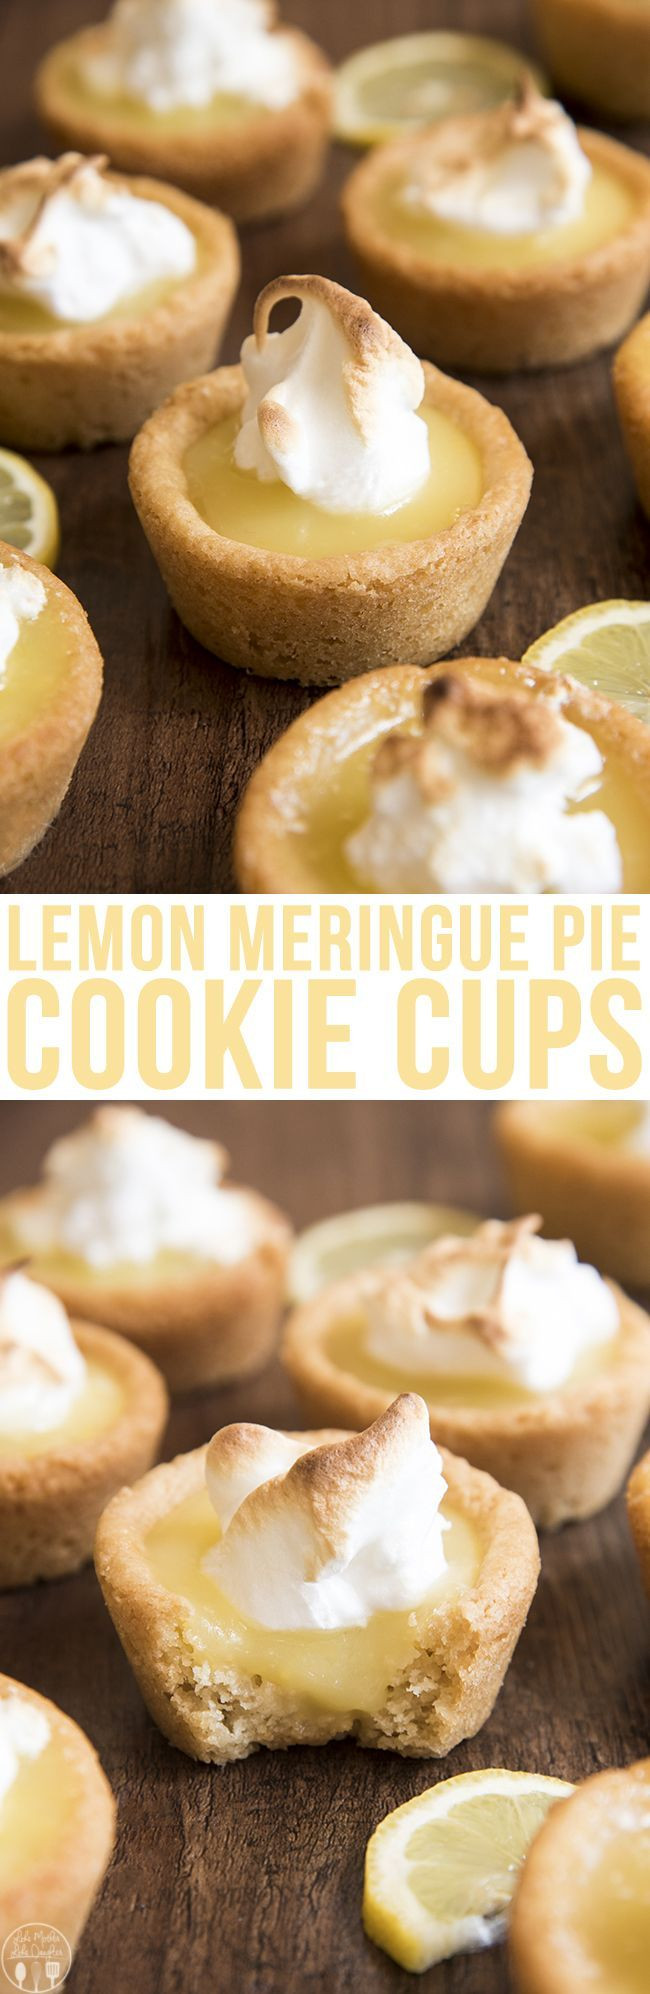 Desserts That Start With T
 Lemon Meringue Pie Cookie Cups These lemon meringue pie